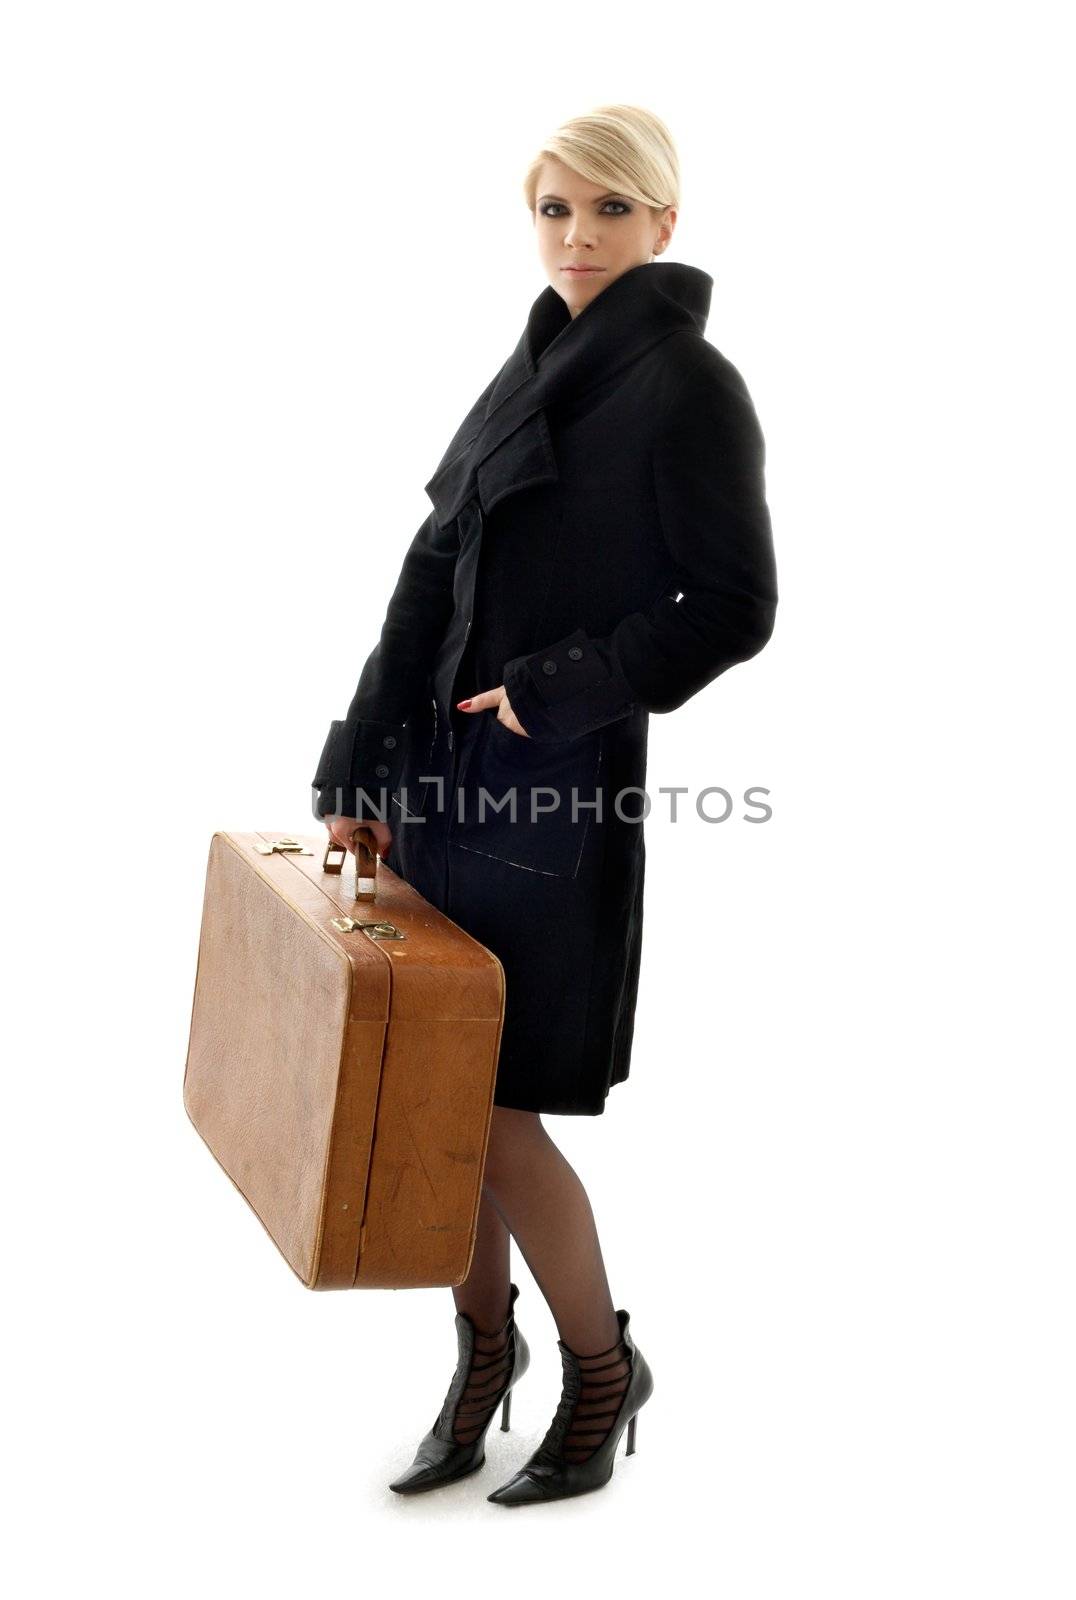 suitcase lady by dolgachov